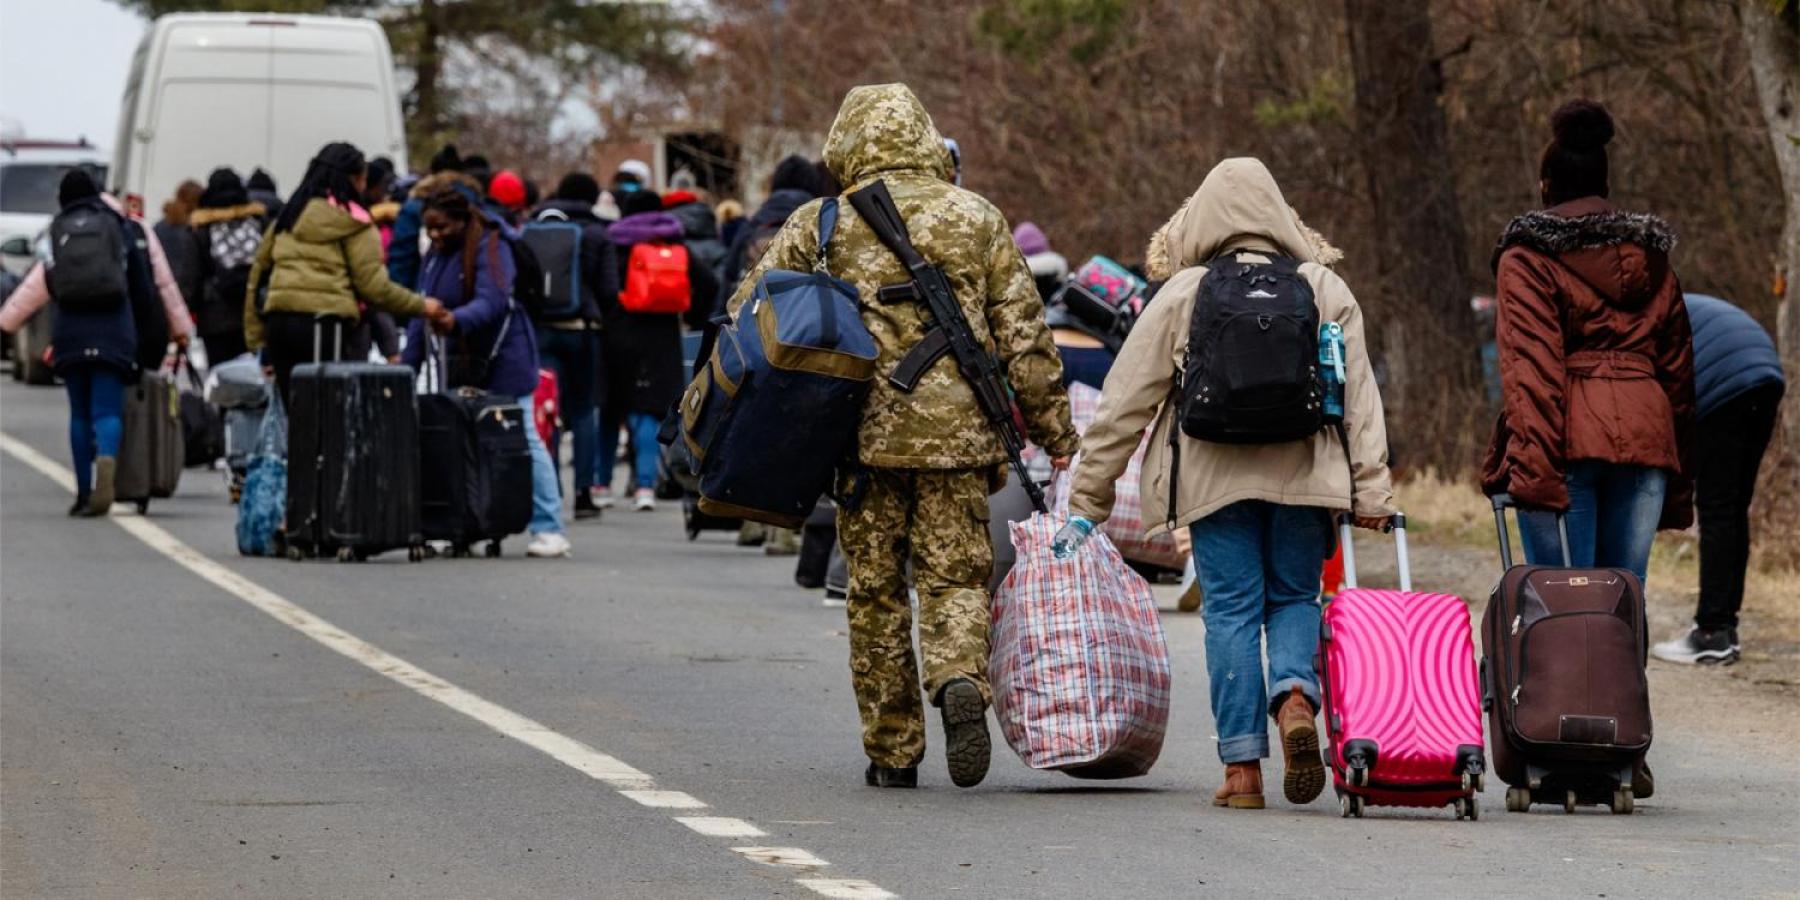 Refugees walking in Ukraine